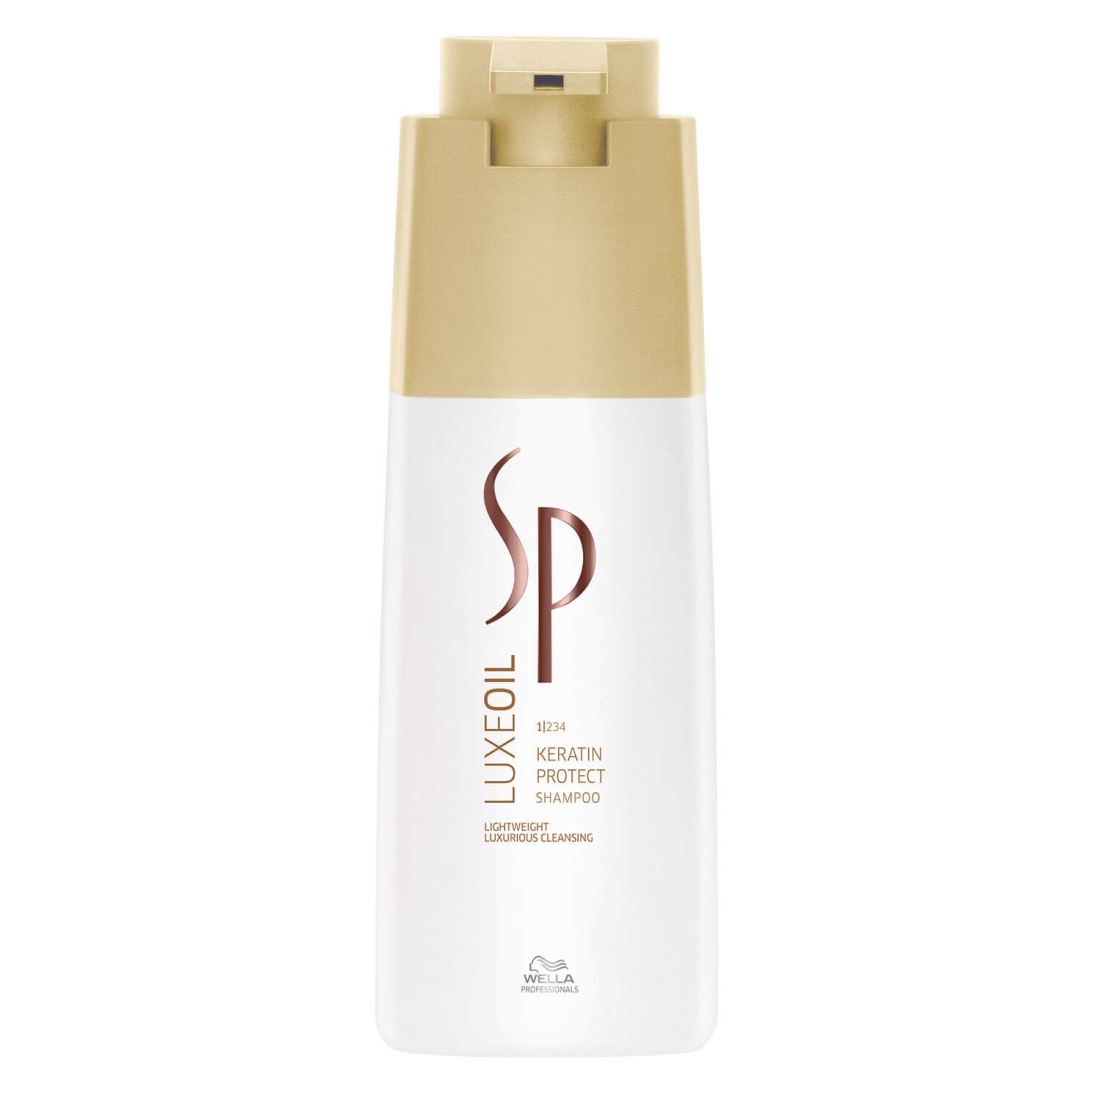 'SP Luxe Oil Keratin Protect' Shampoo - 1 L